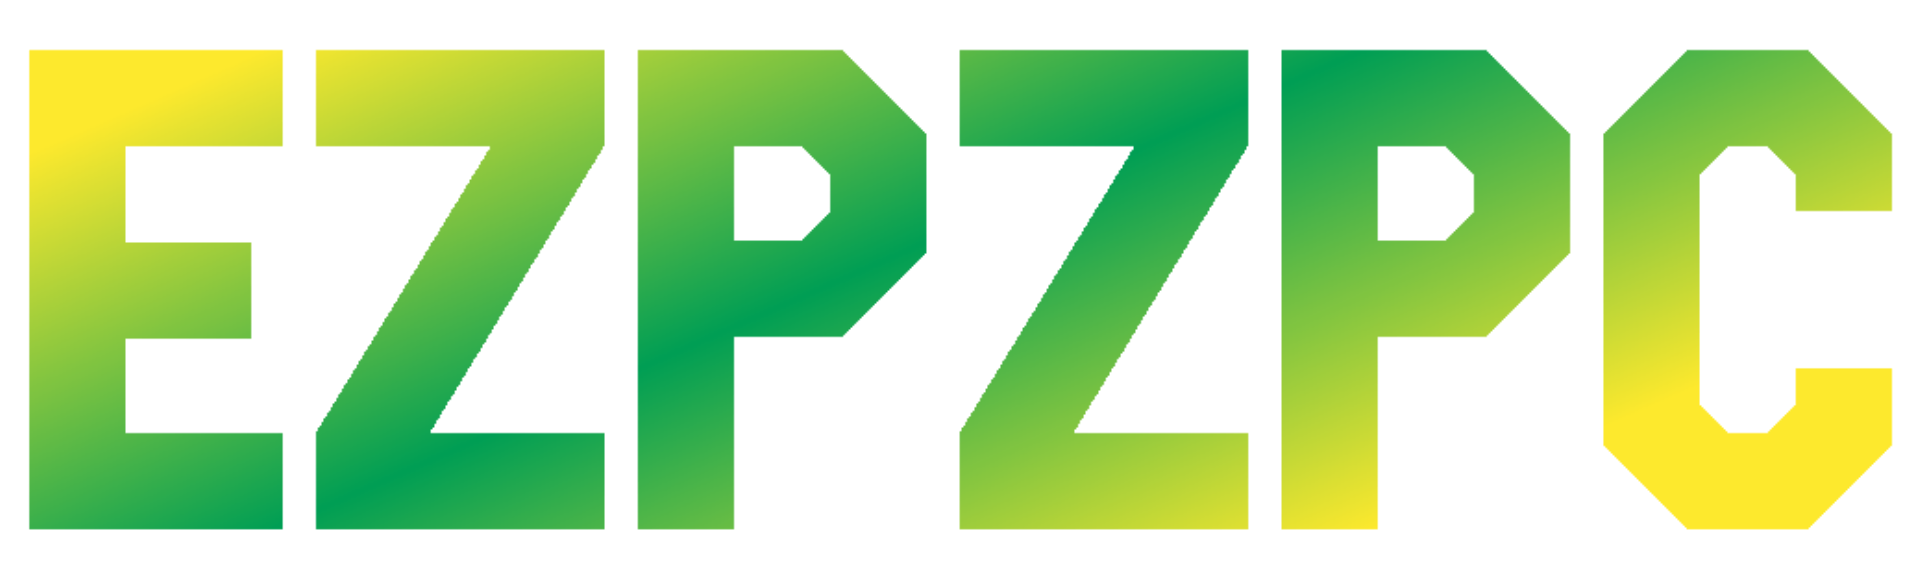 Image of EZPZPC logo